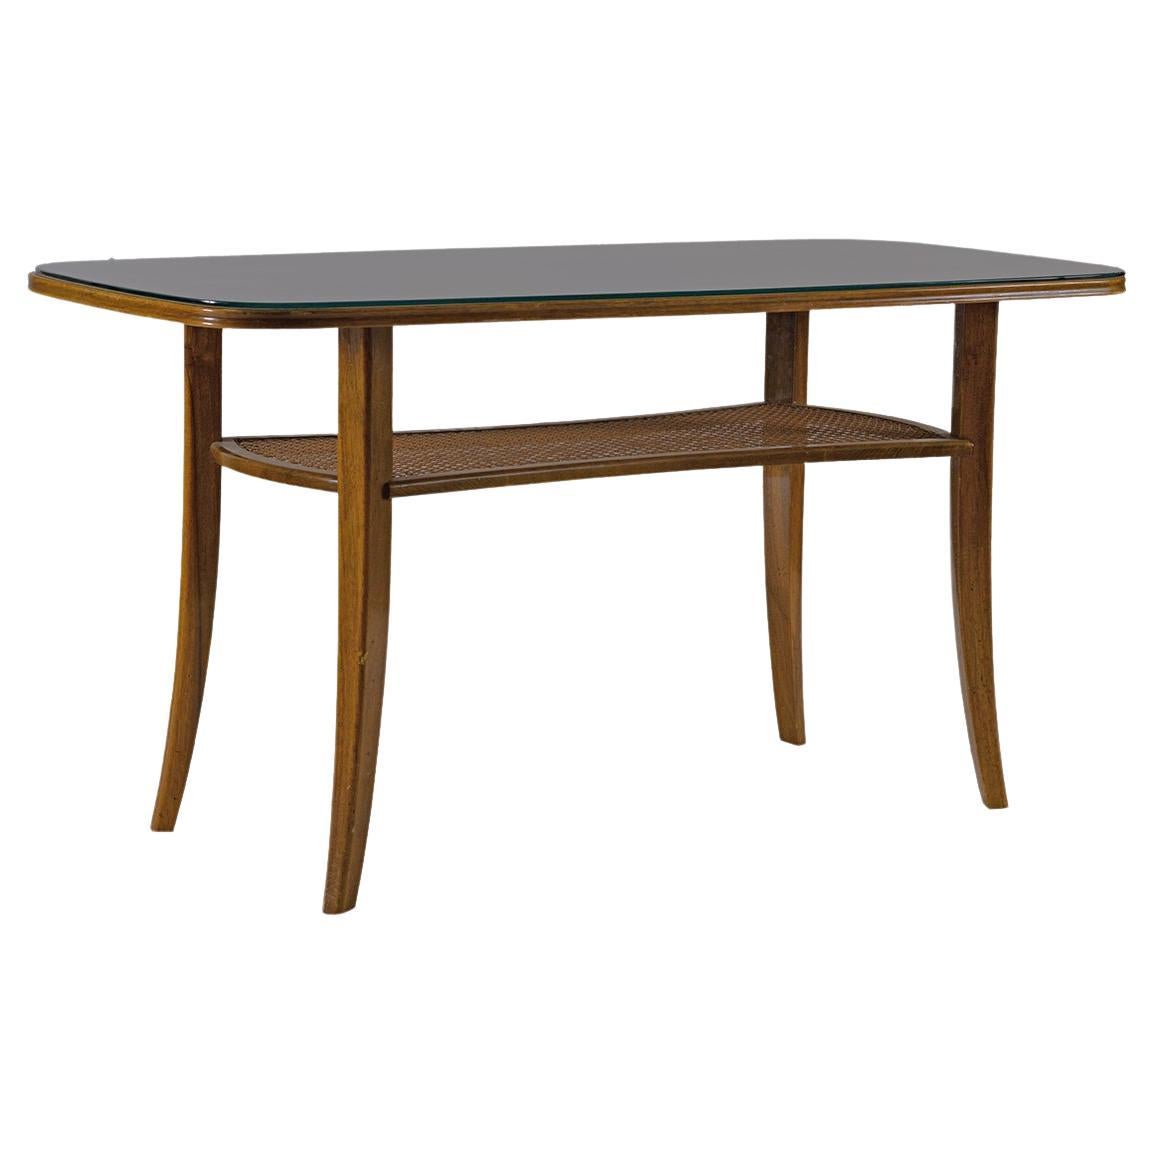 Josef Frank and Svensk Tenn Attributed Table Original Mid-Century Modern, 1940 For Sale